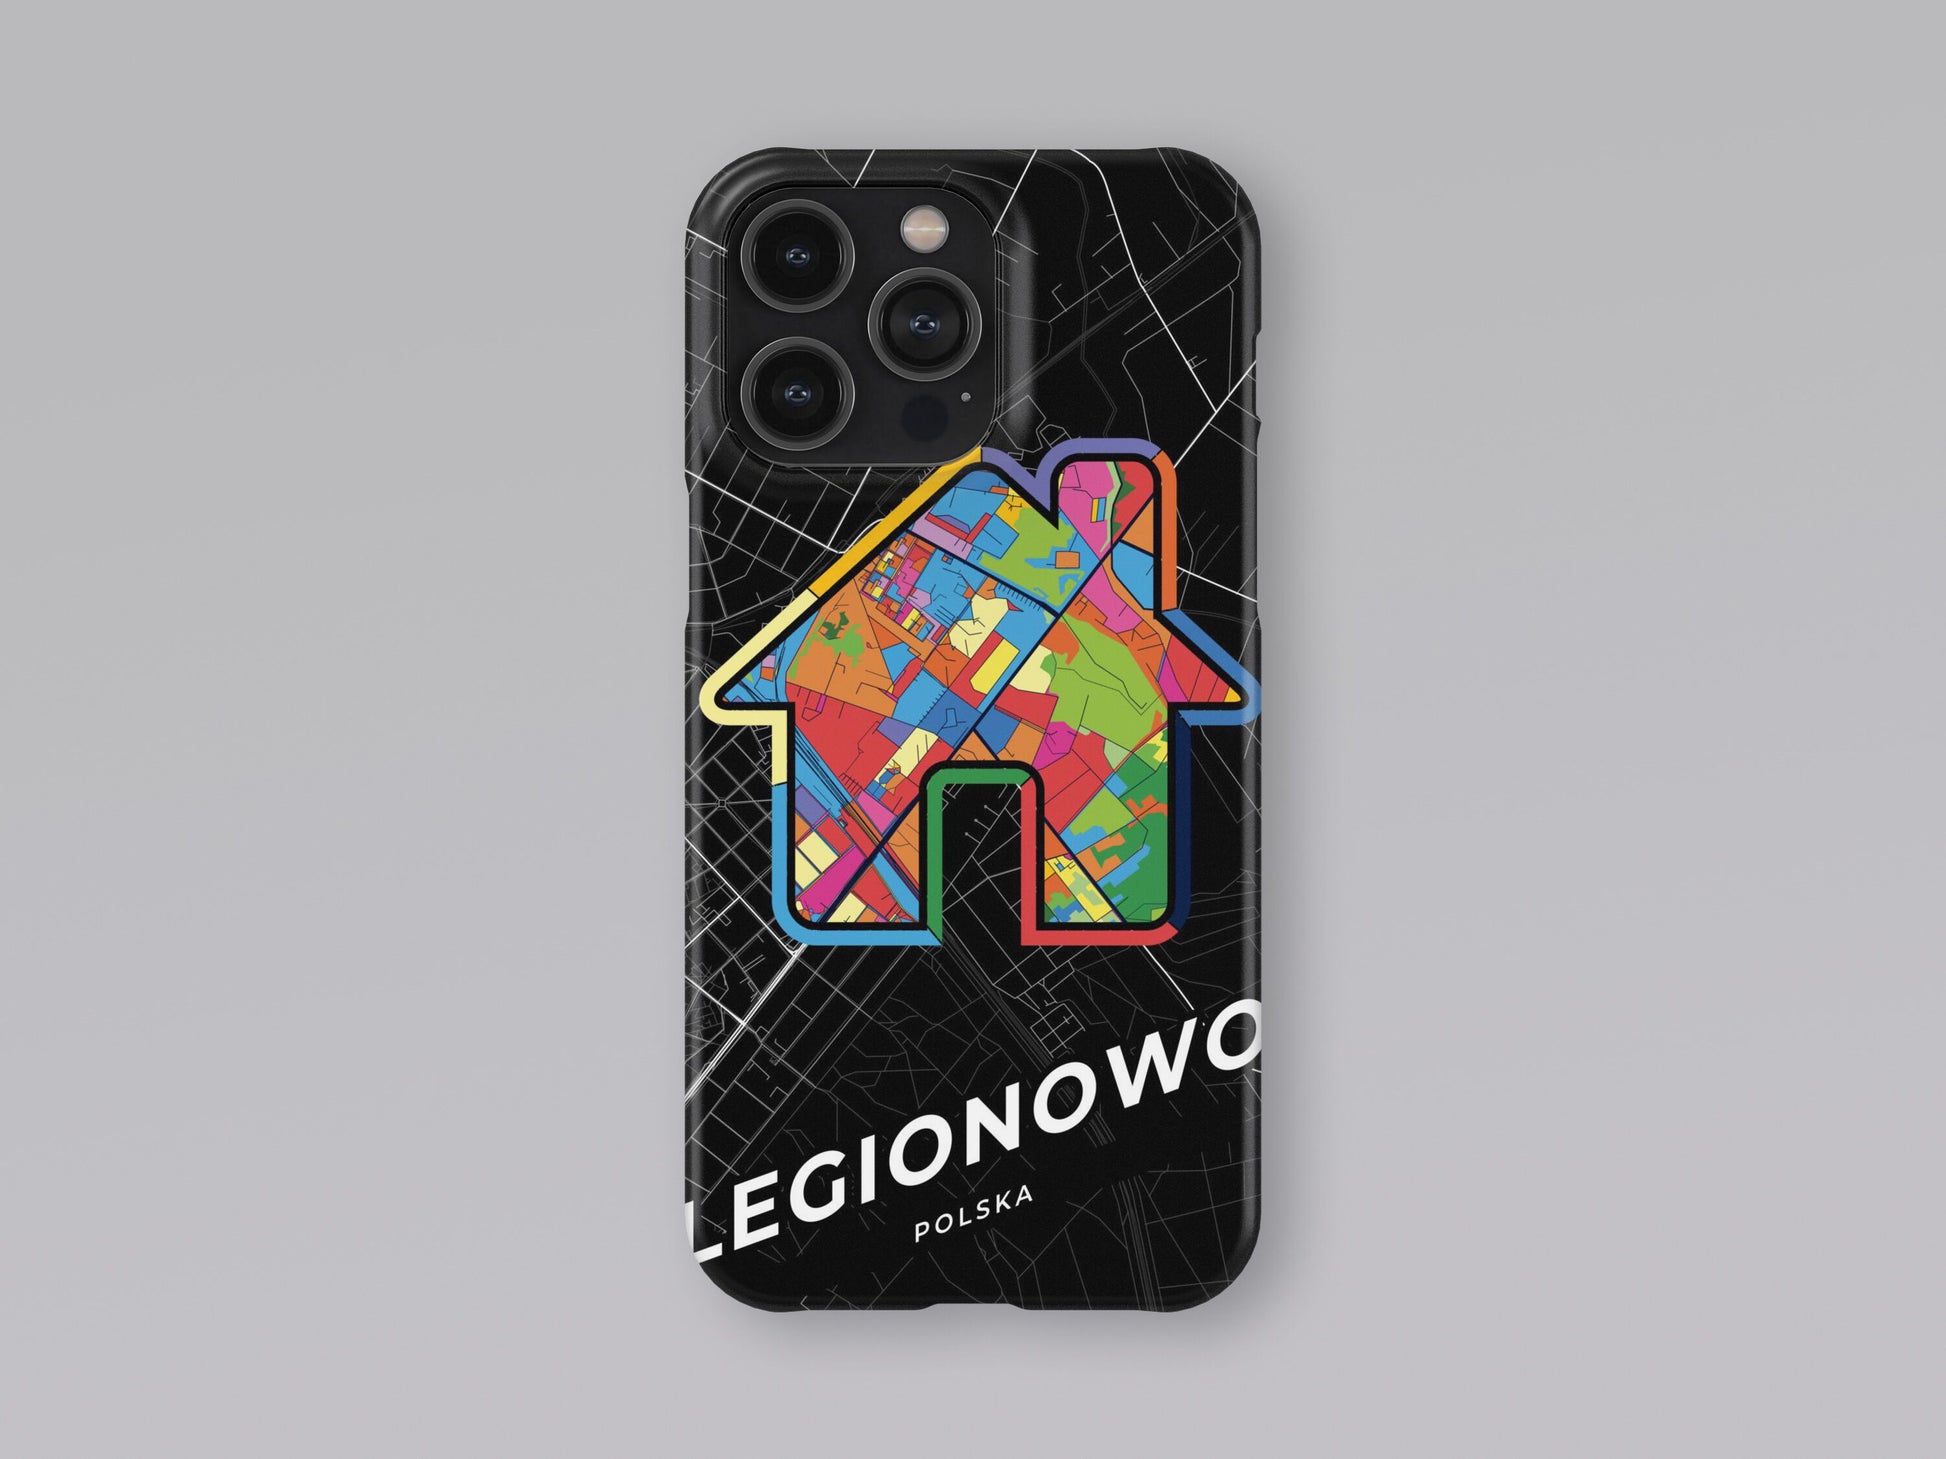 Legionowo Poland slim phone case with colorful icon. Birthday, wedding or housewarming gift. Couple match cases. 3